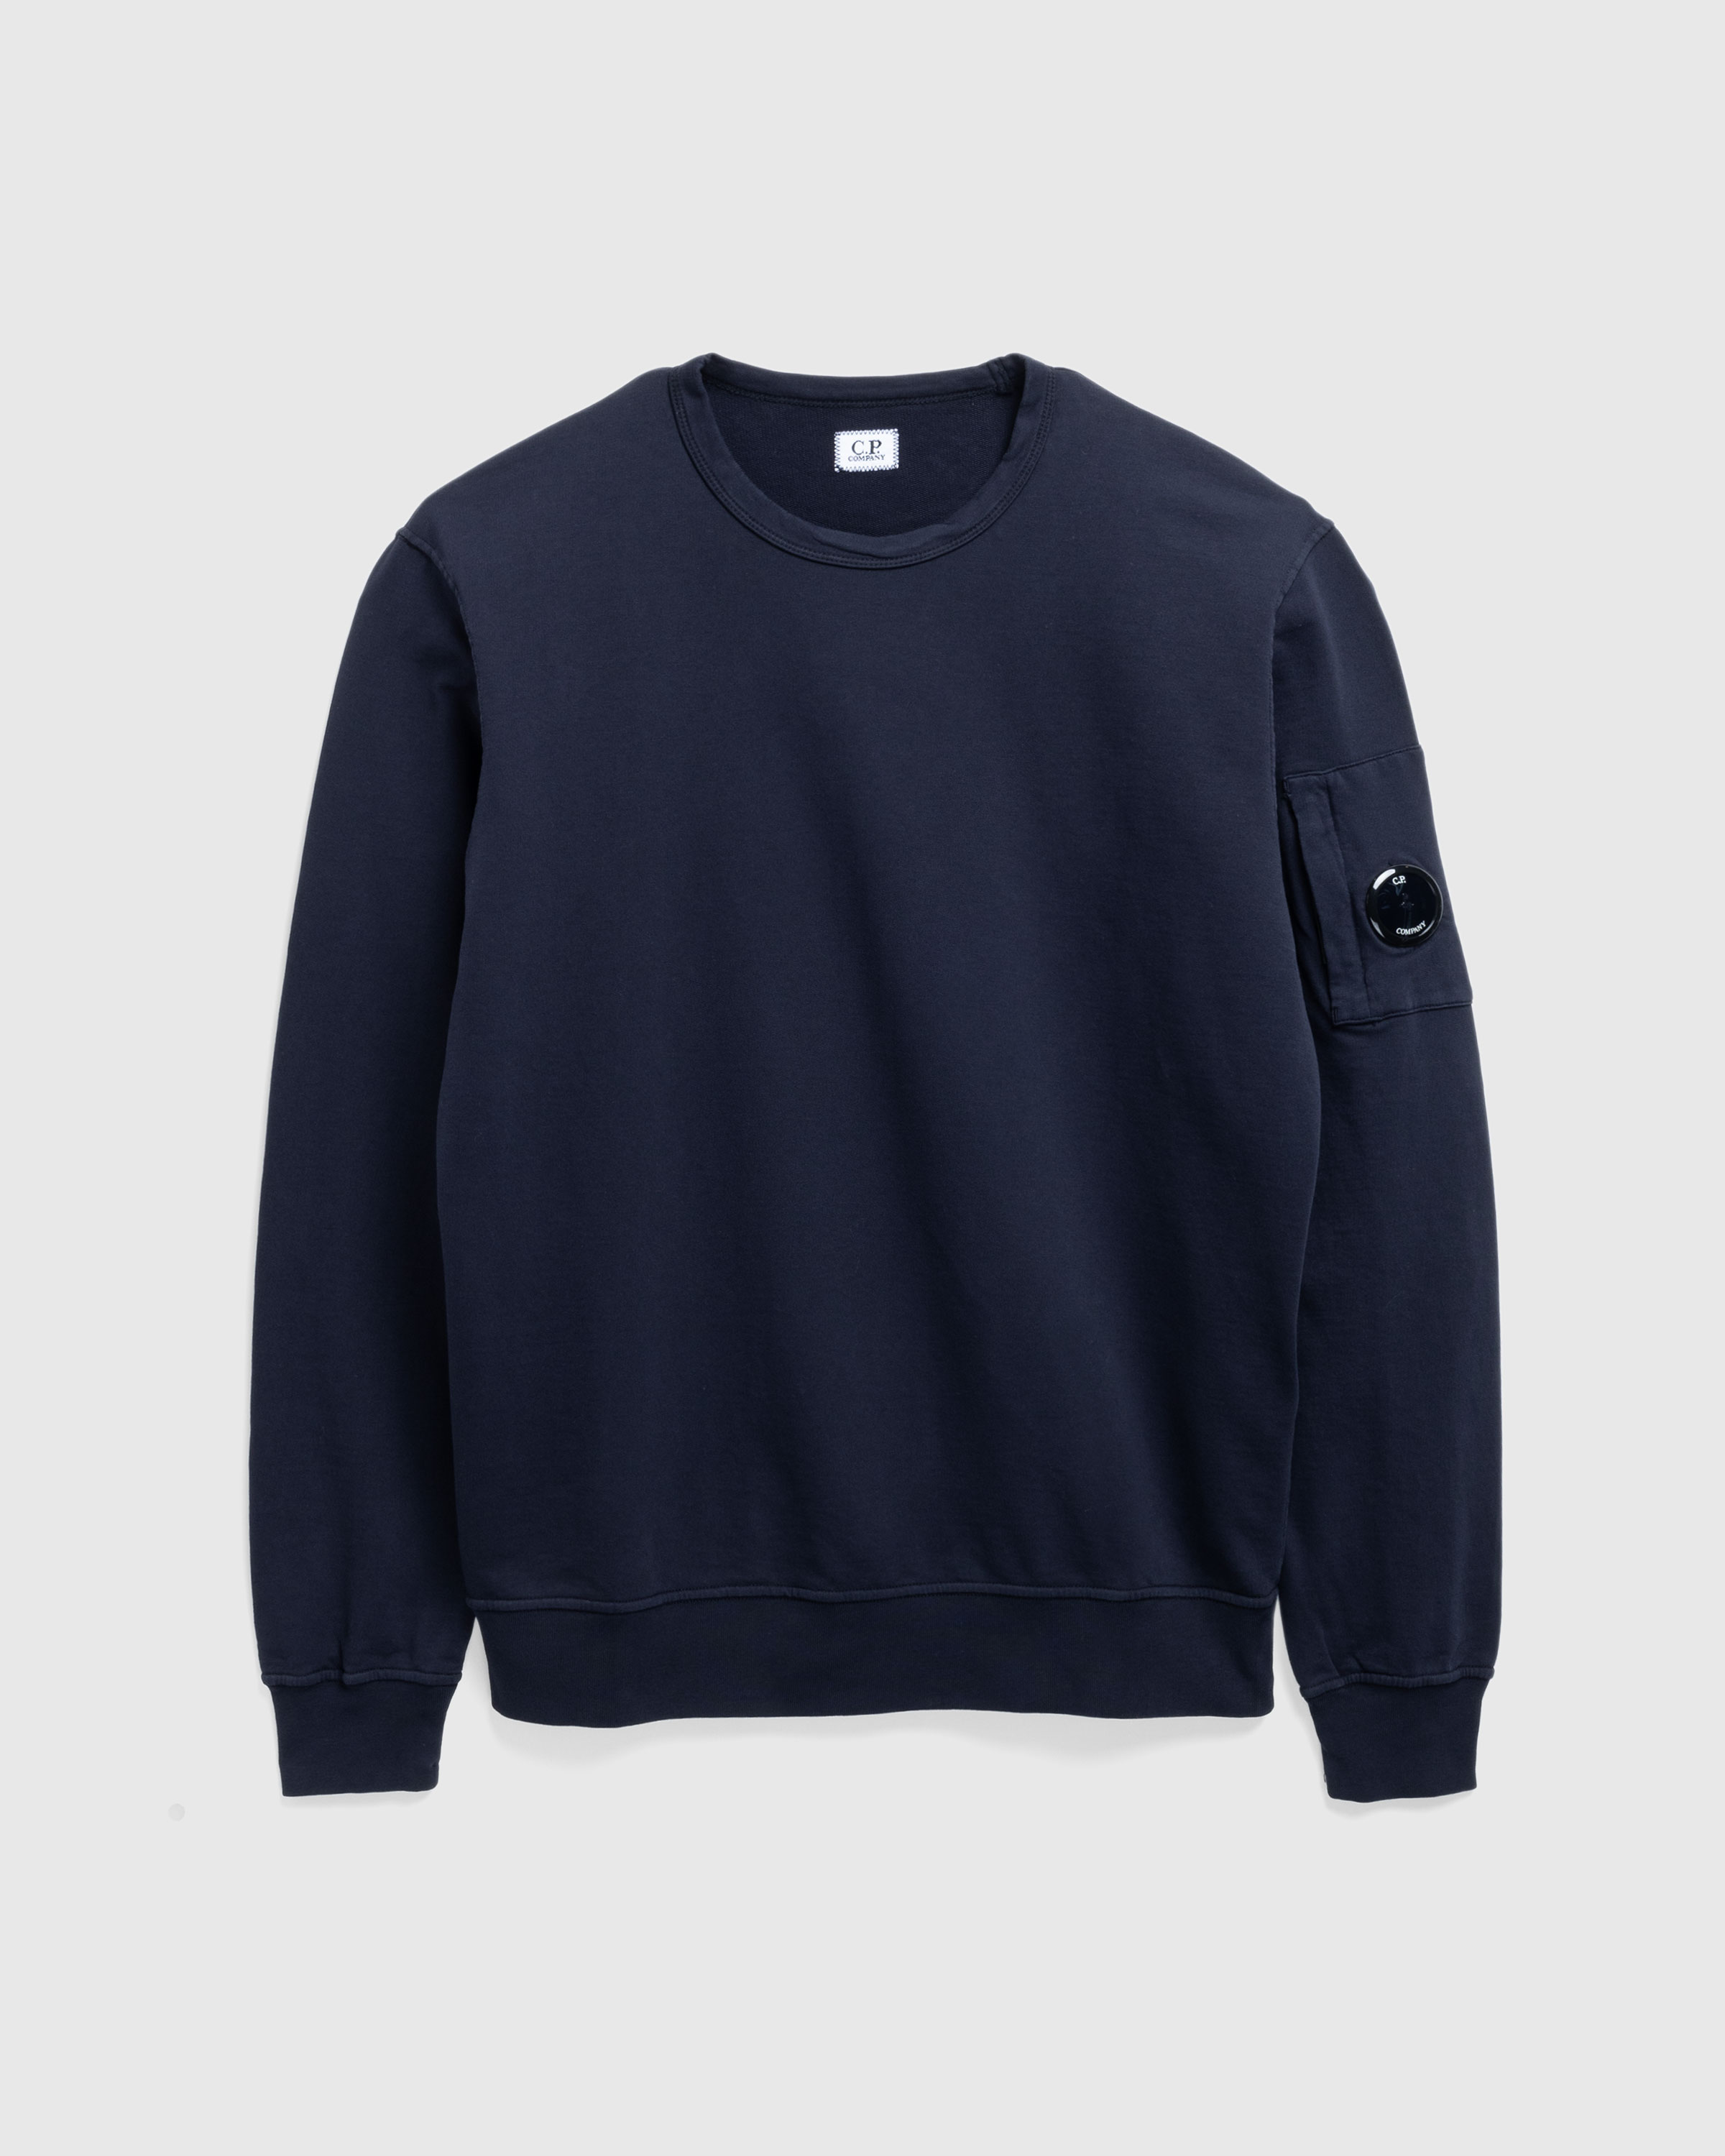 C.P. Company – Light Fleece Sweatshirt Total Eclipse - Hoodies - Grey - Image 1